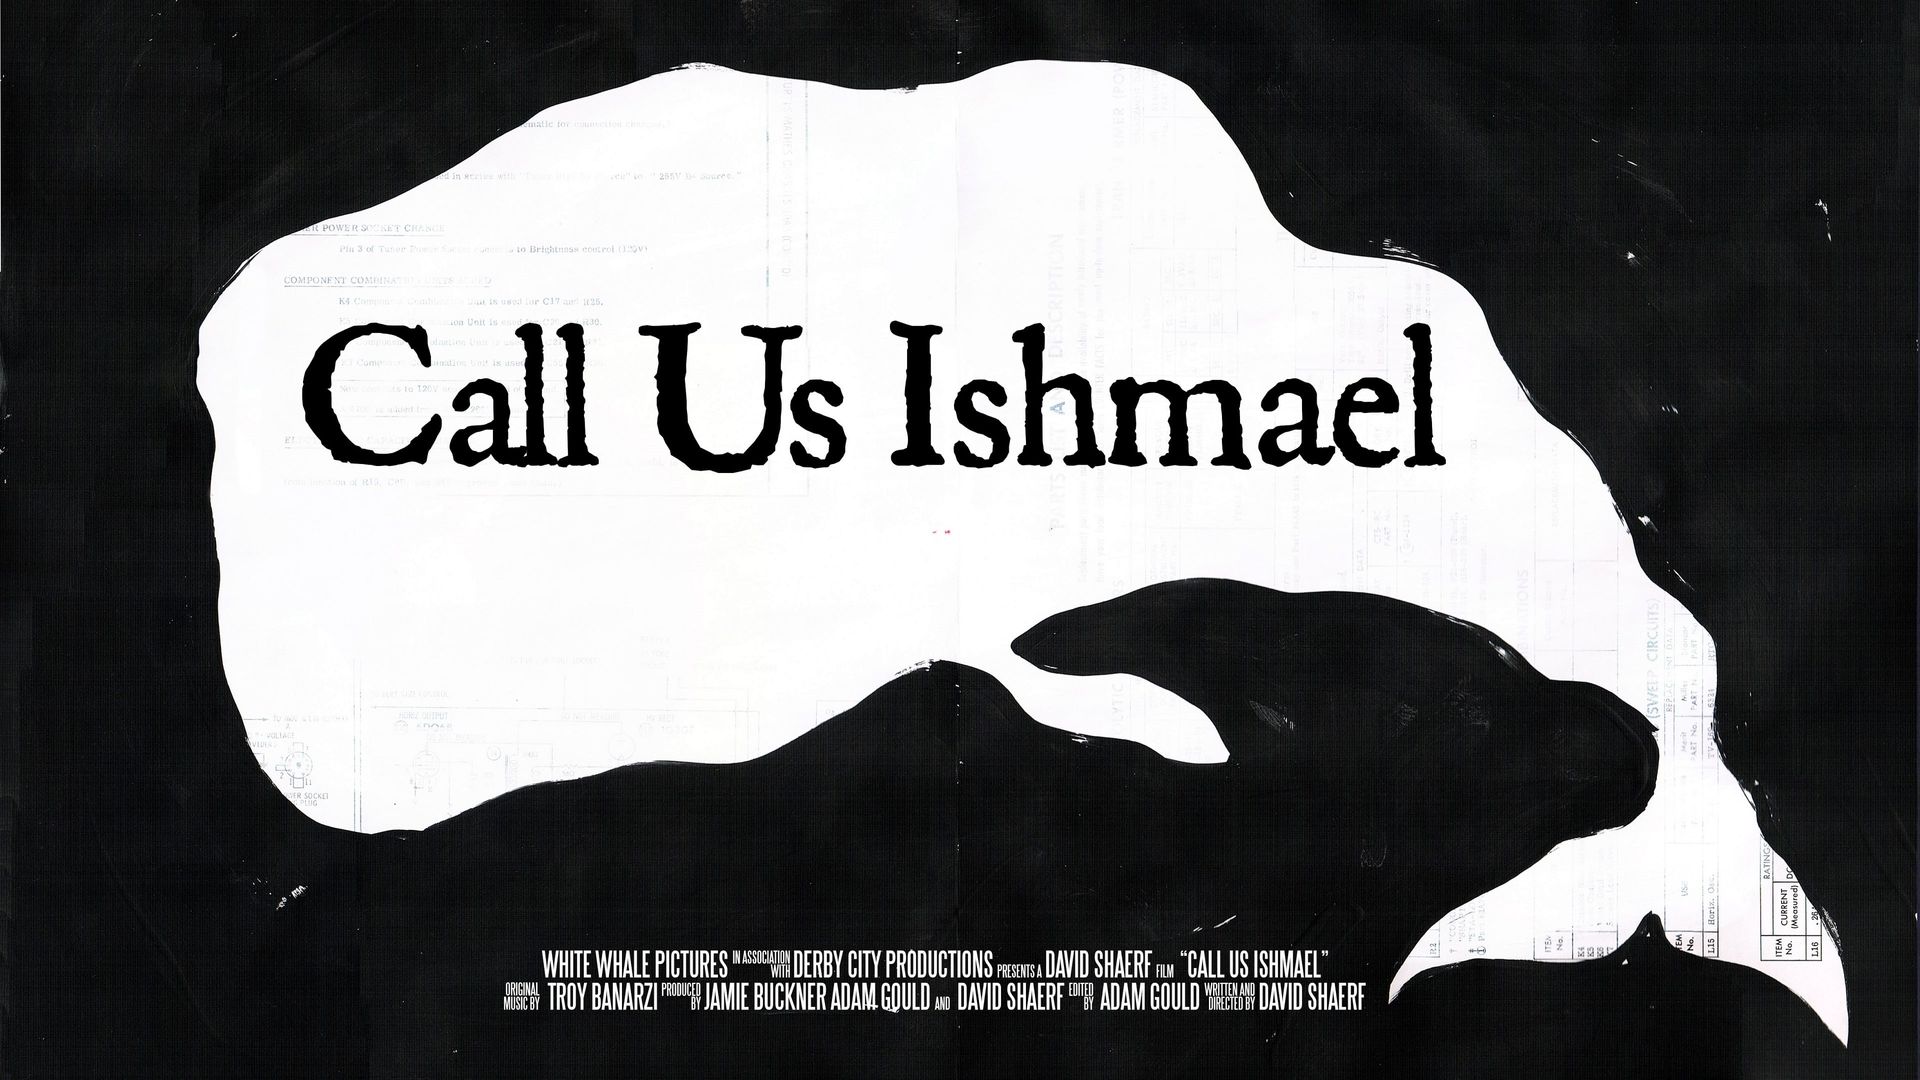 Call Us Ishmael background